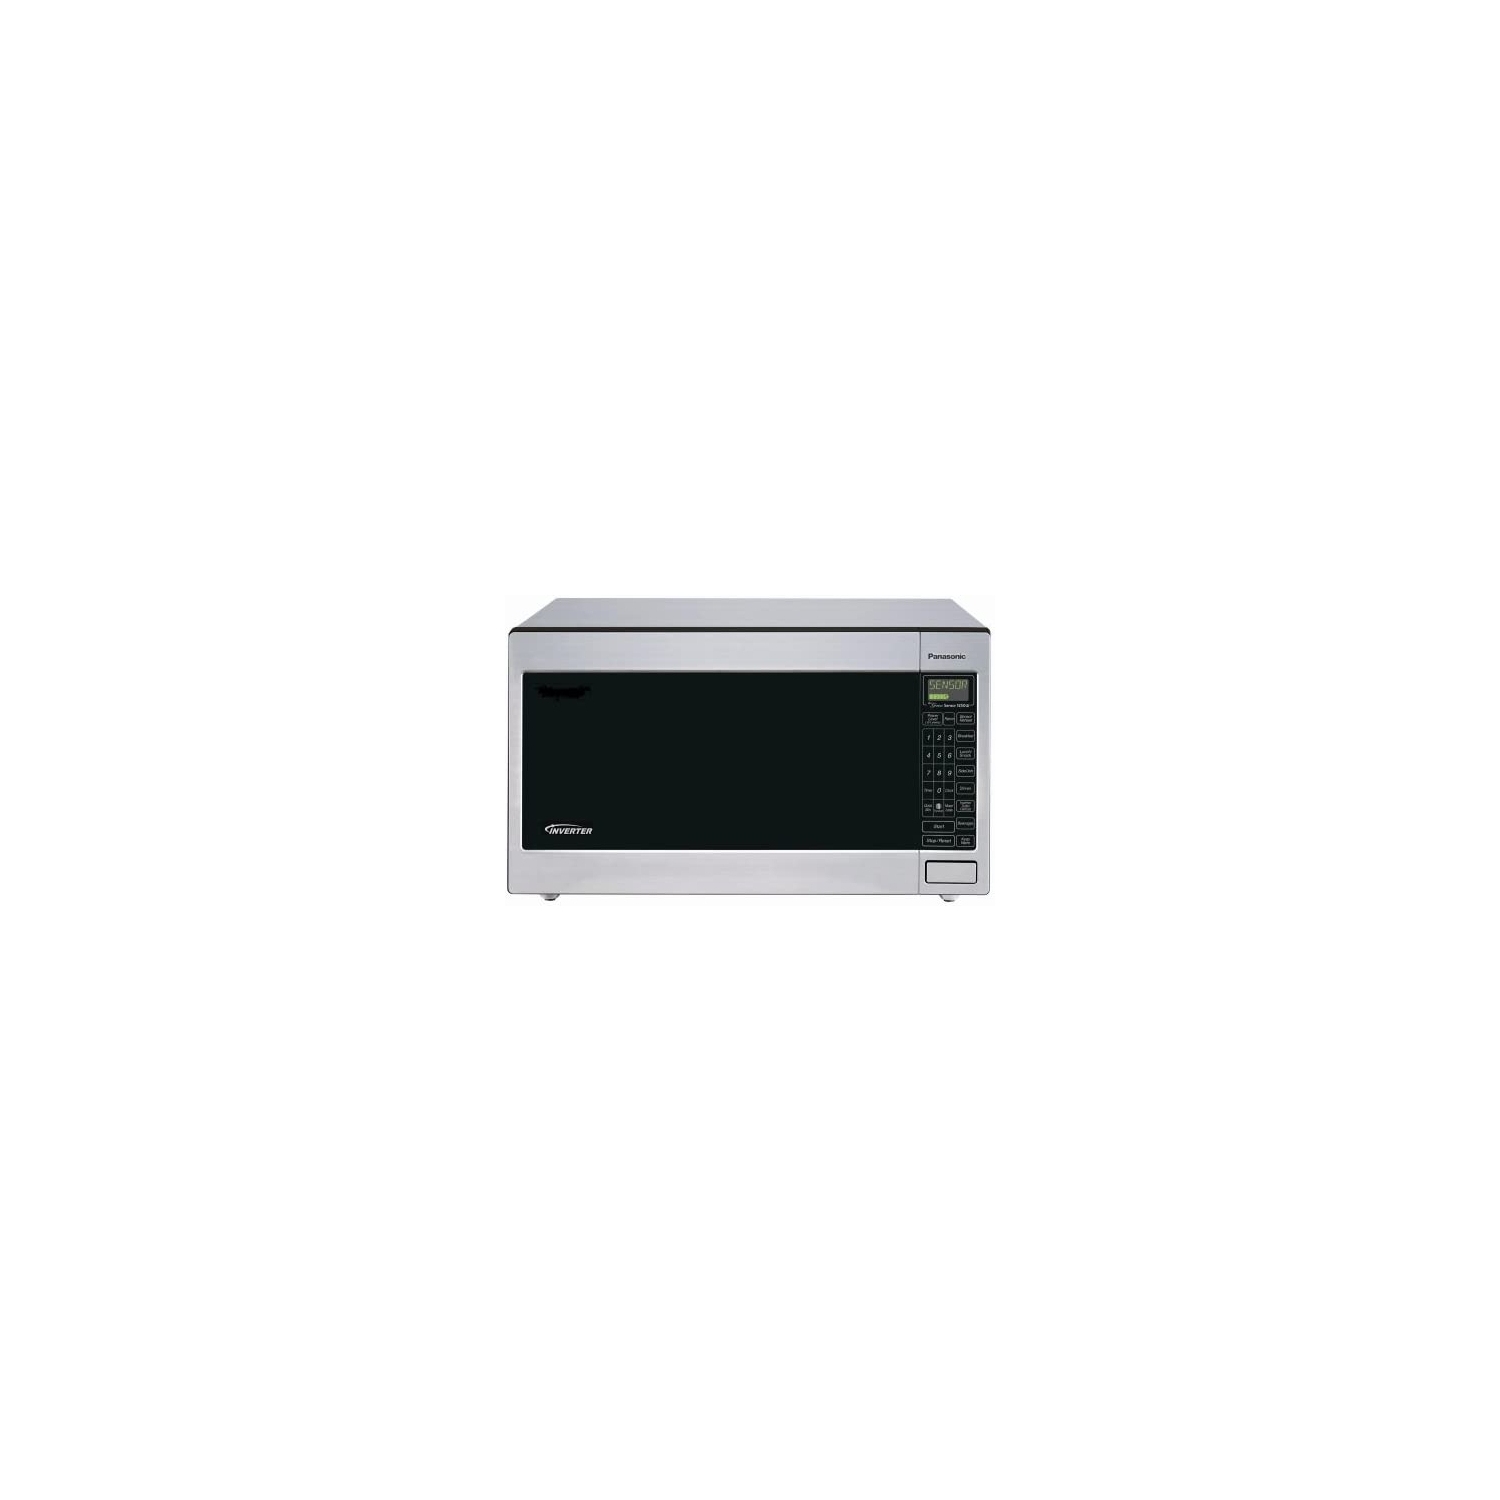 Refurbished (Good) Panasonic 2.2 Cu. Ft. 1250W Inverter Microwave Oven, Stainless Steel, NN-T945SF